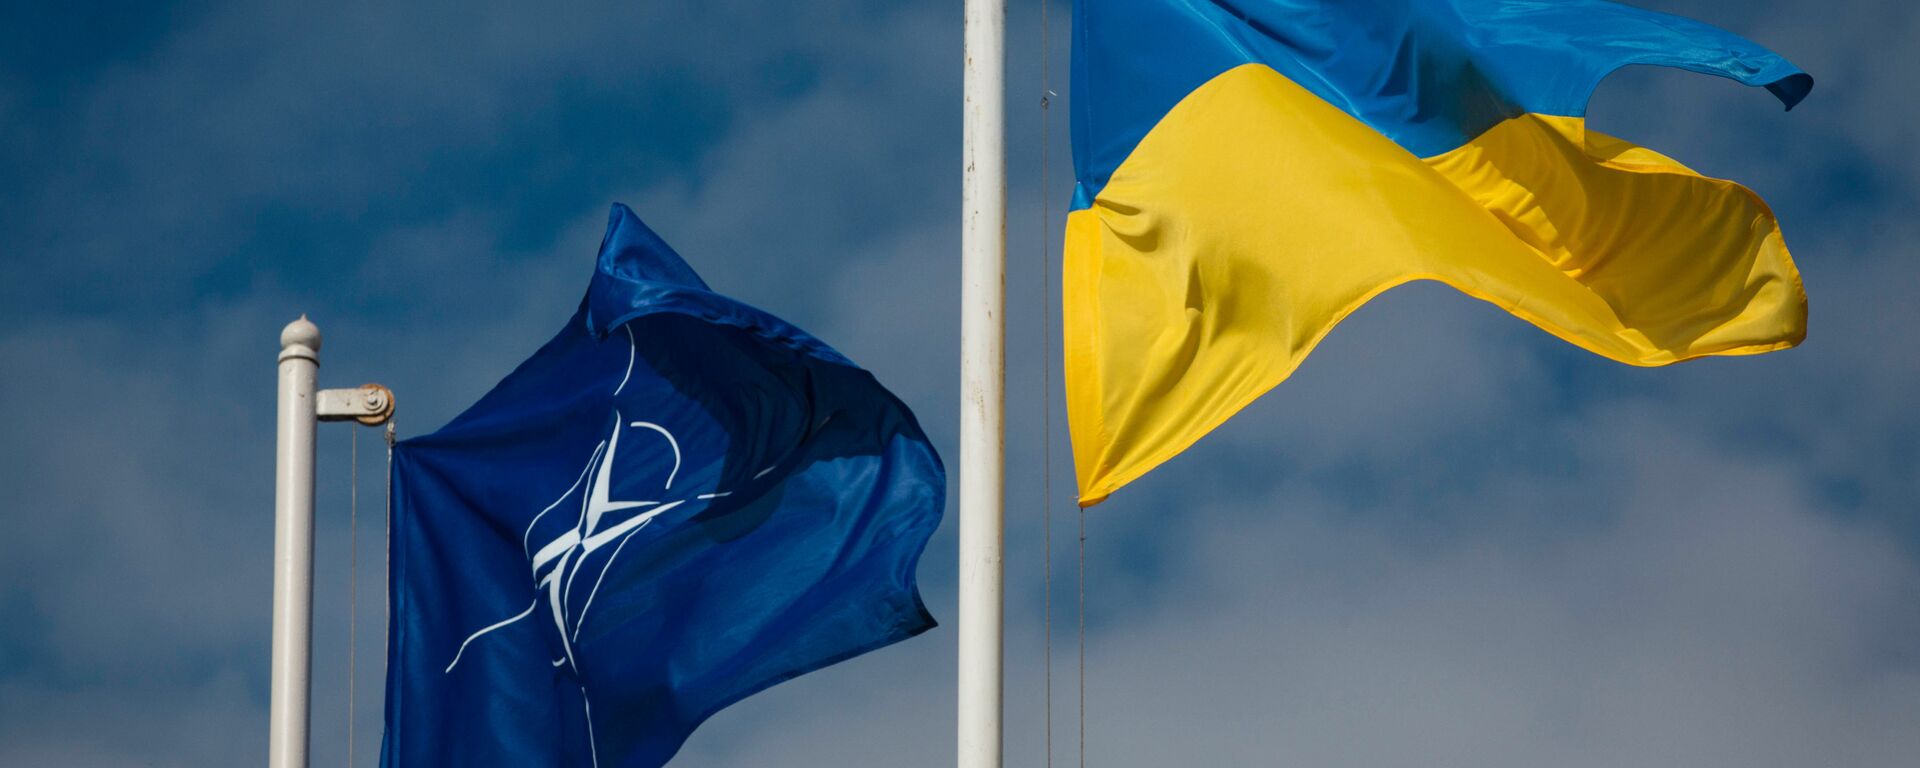 Las banderas de la OTAN y Ucrania - Sputnik Mundo, 1920, 24.05.2021